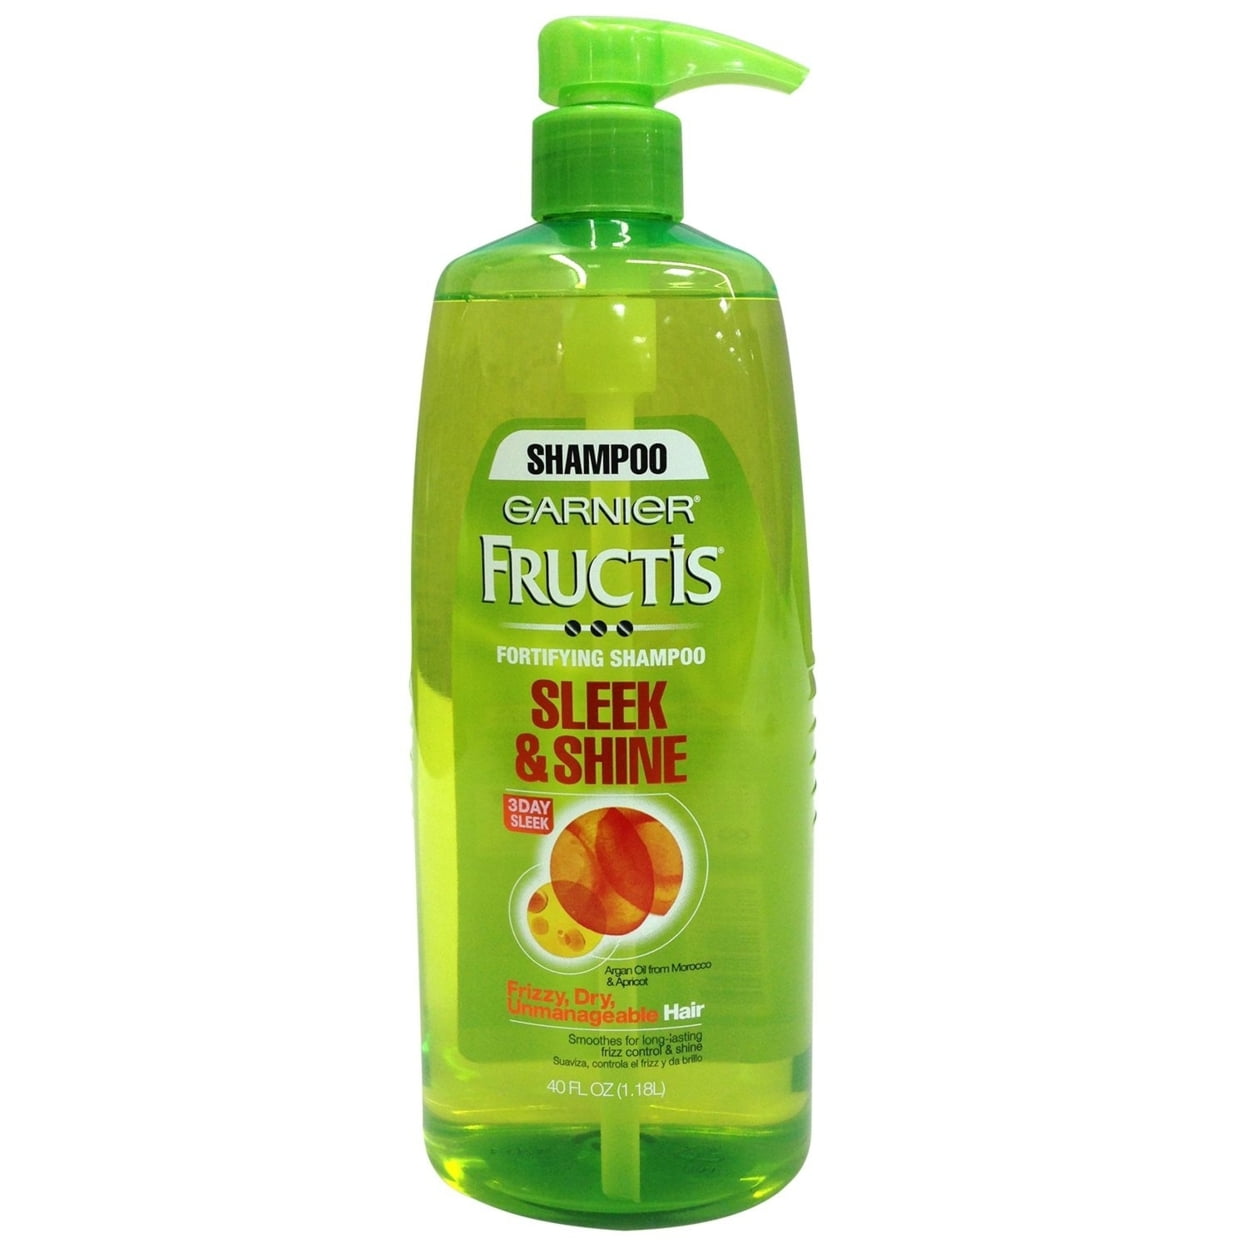 Garnier Fructis Shampoo - Pump - Walmart.com